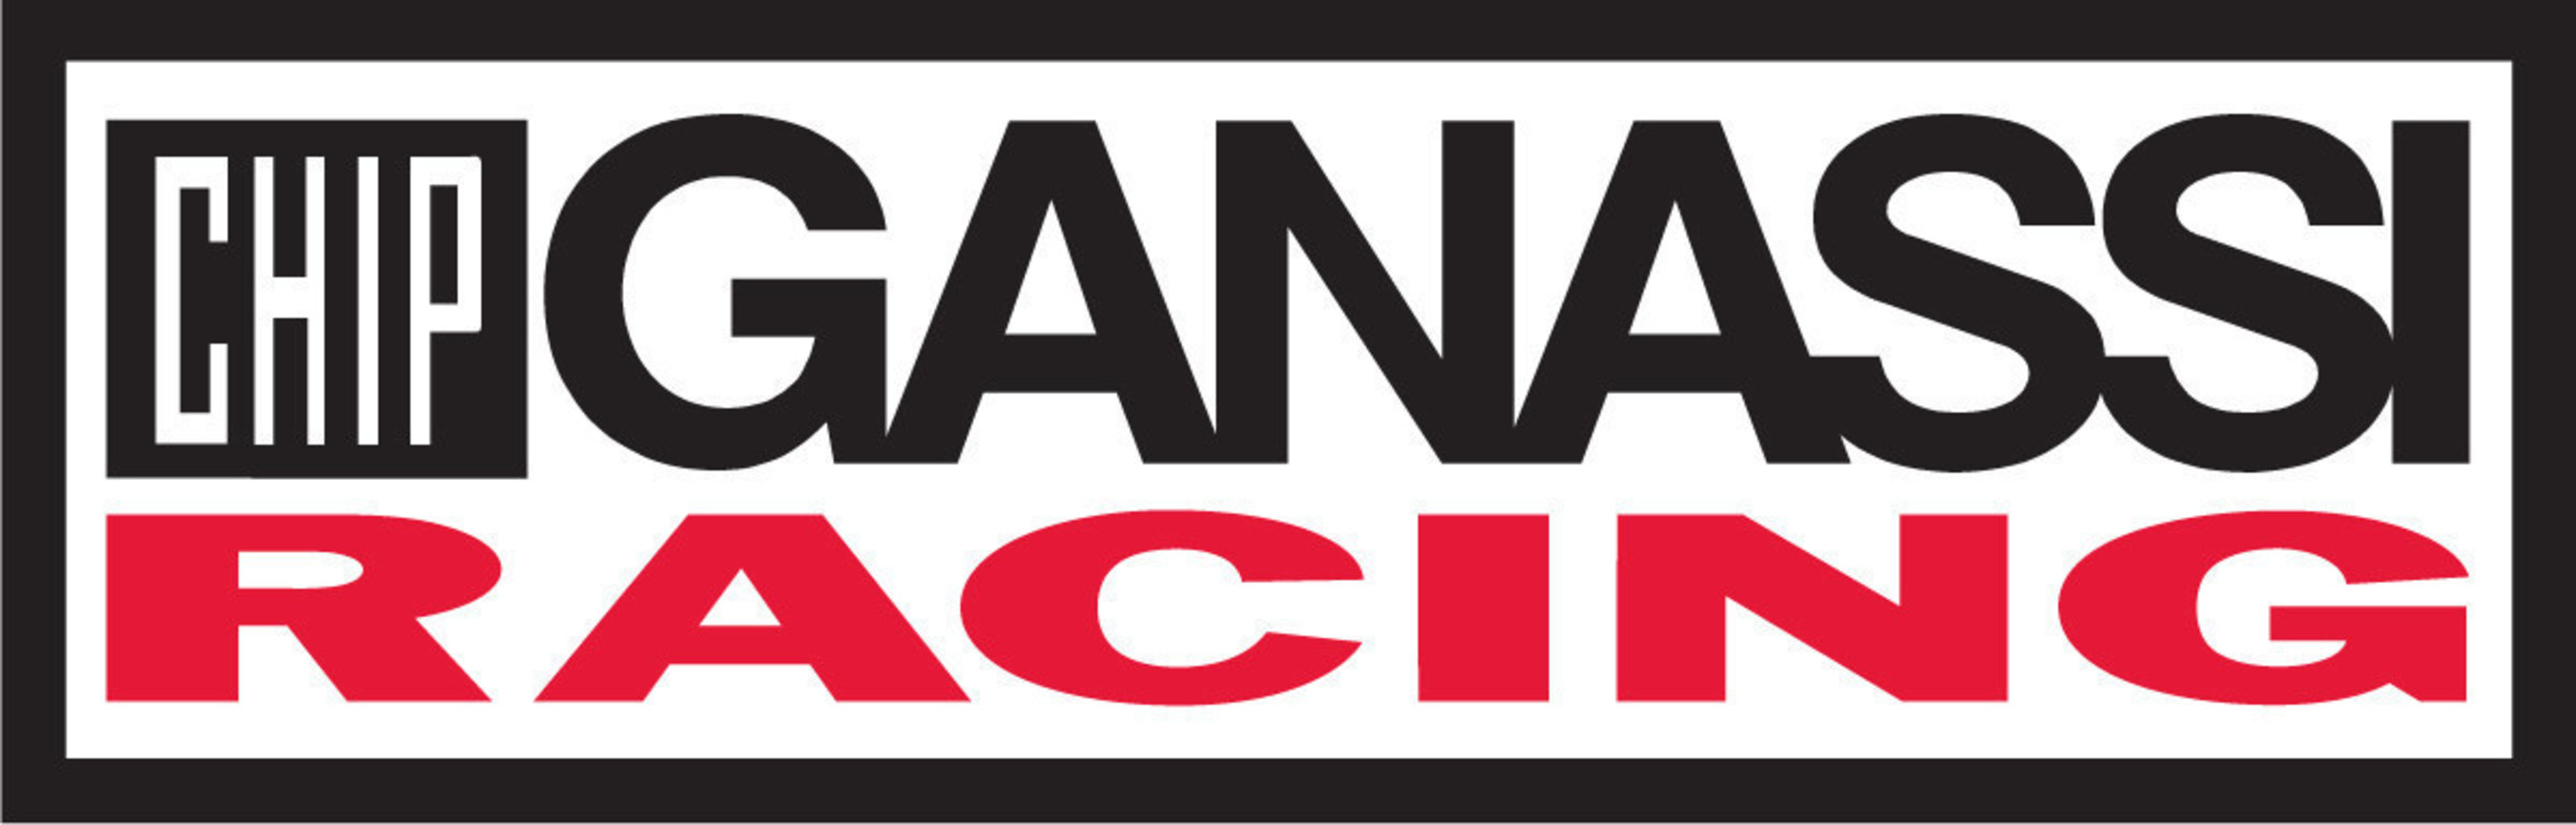 Chip Ganassi Racing.jpg